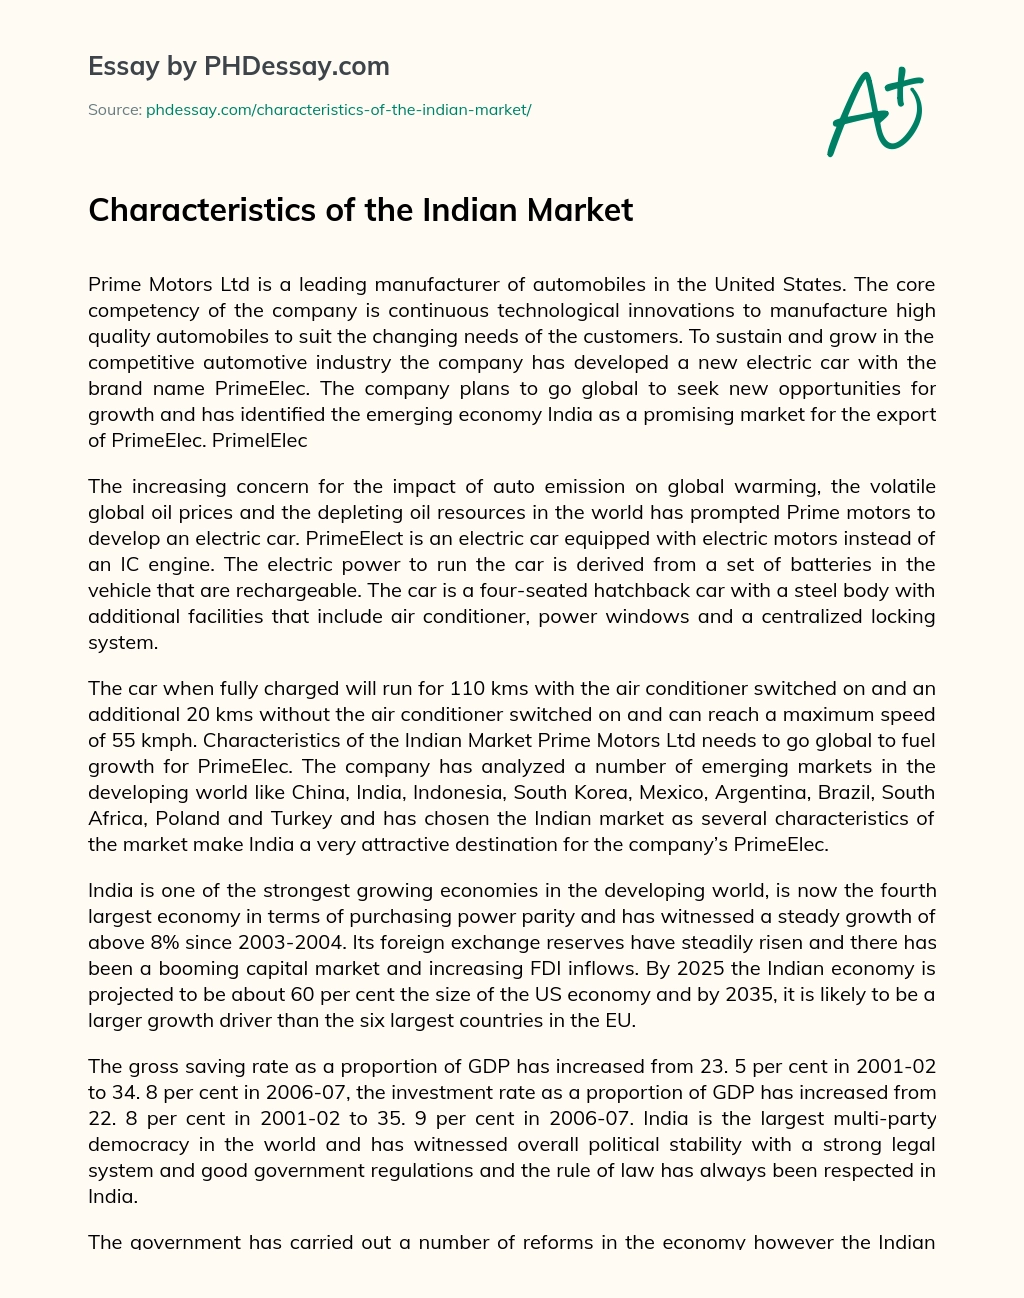 Characteristics of the Indian Market essay